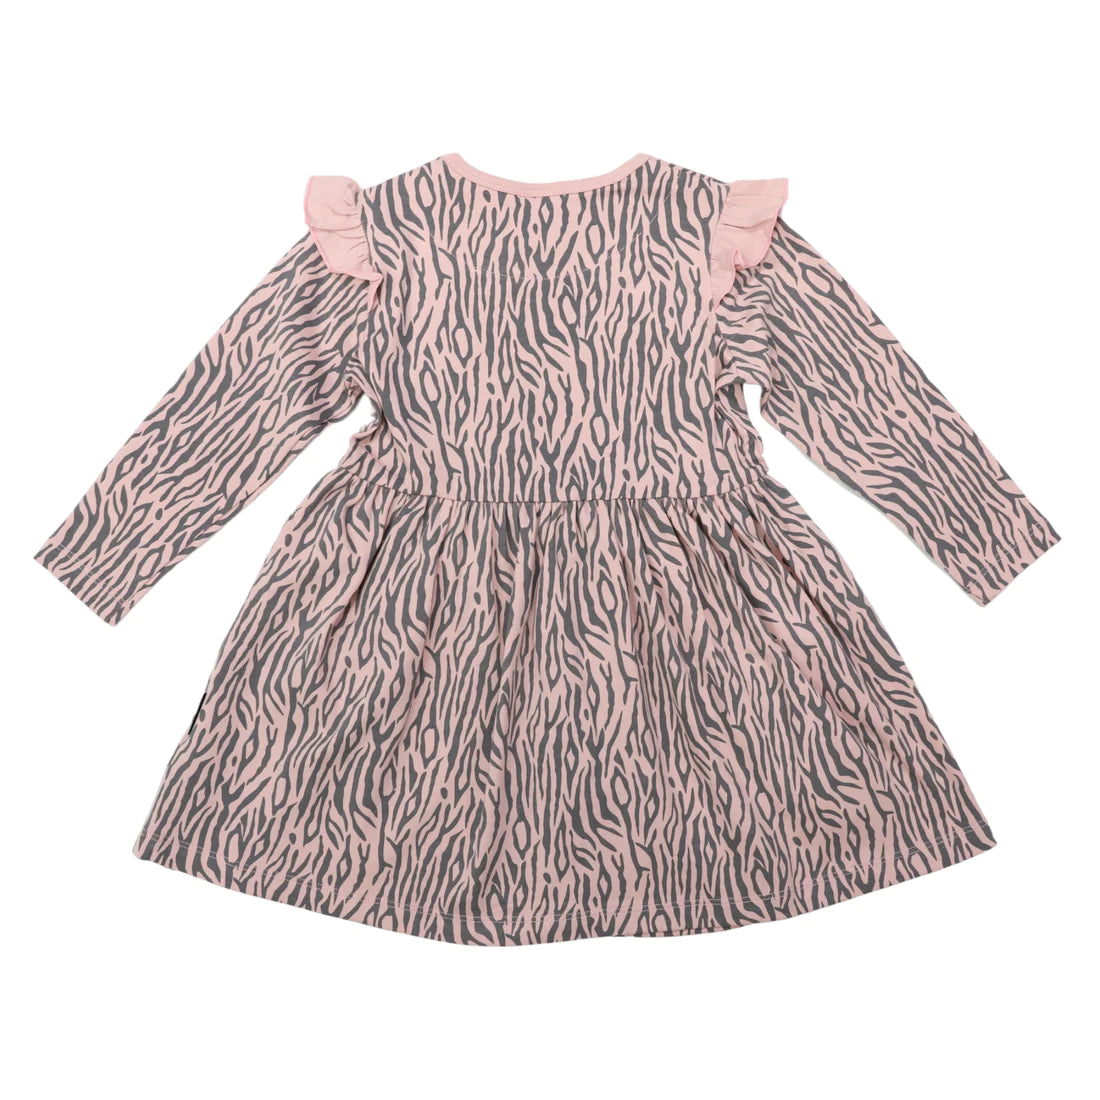 Korango Tiger Stripe Frill Dress - Dusty Pink